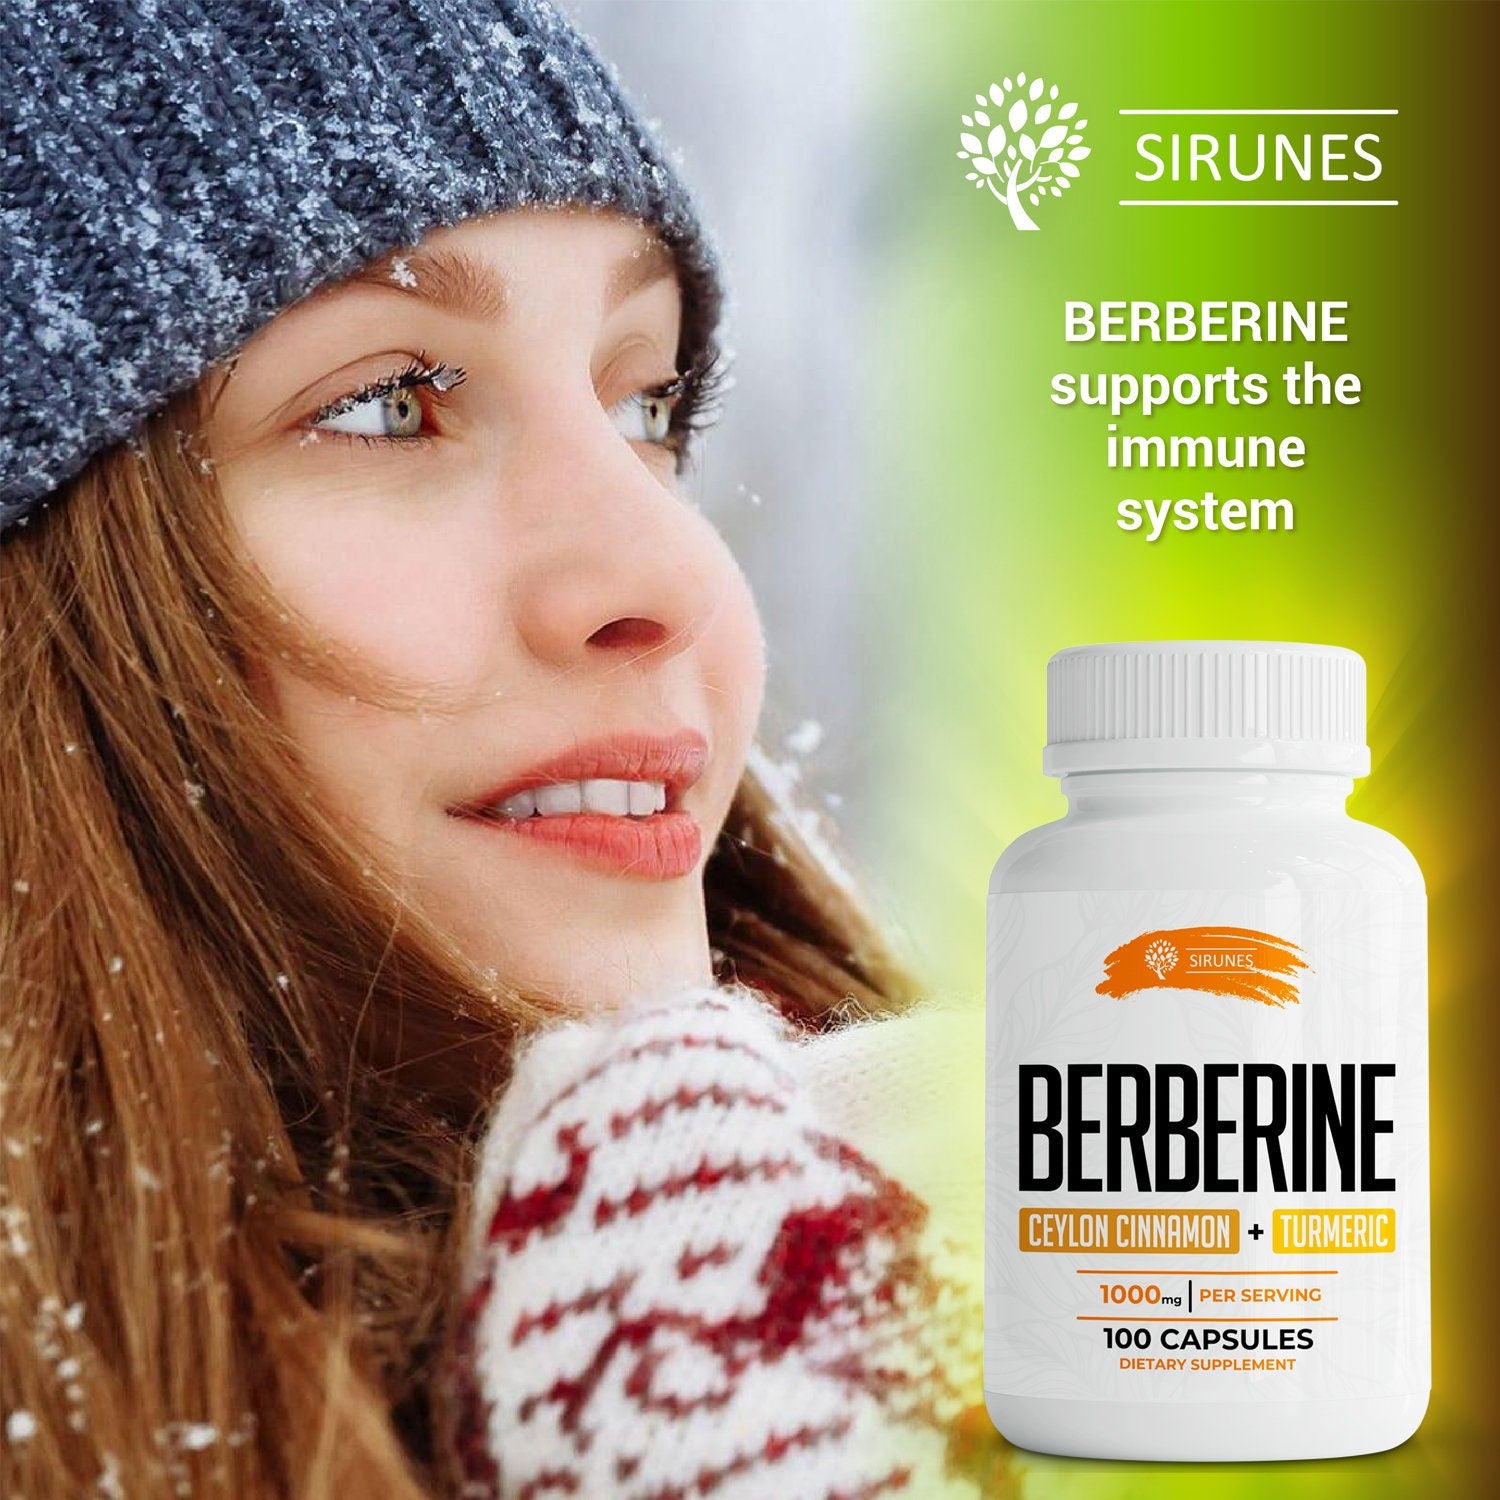 Berberine 100 Capsules Ceylon Cinnamon & Turmeric - Berberine HCL Dietary Supplement  Ideal for Immune Support, Heart, Cholesterol Level